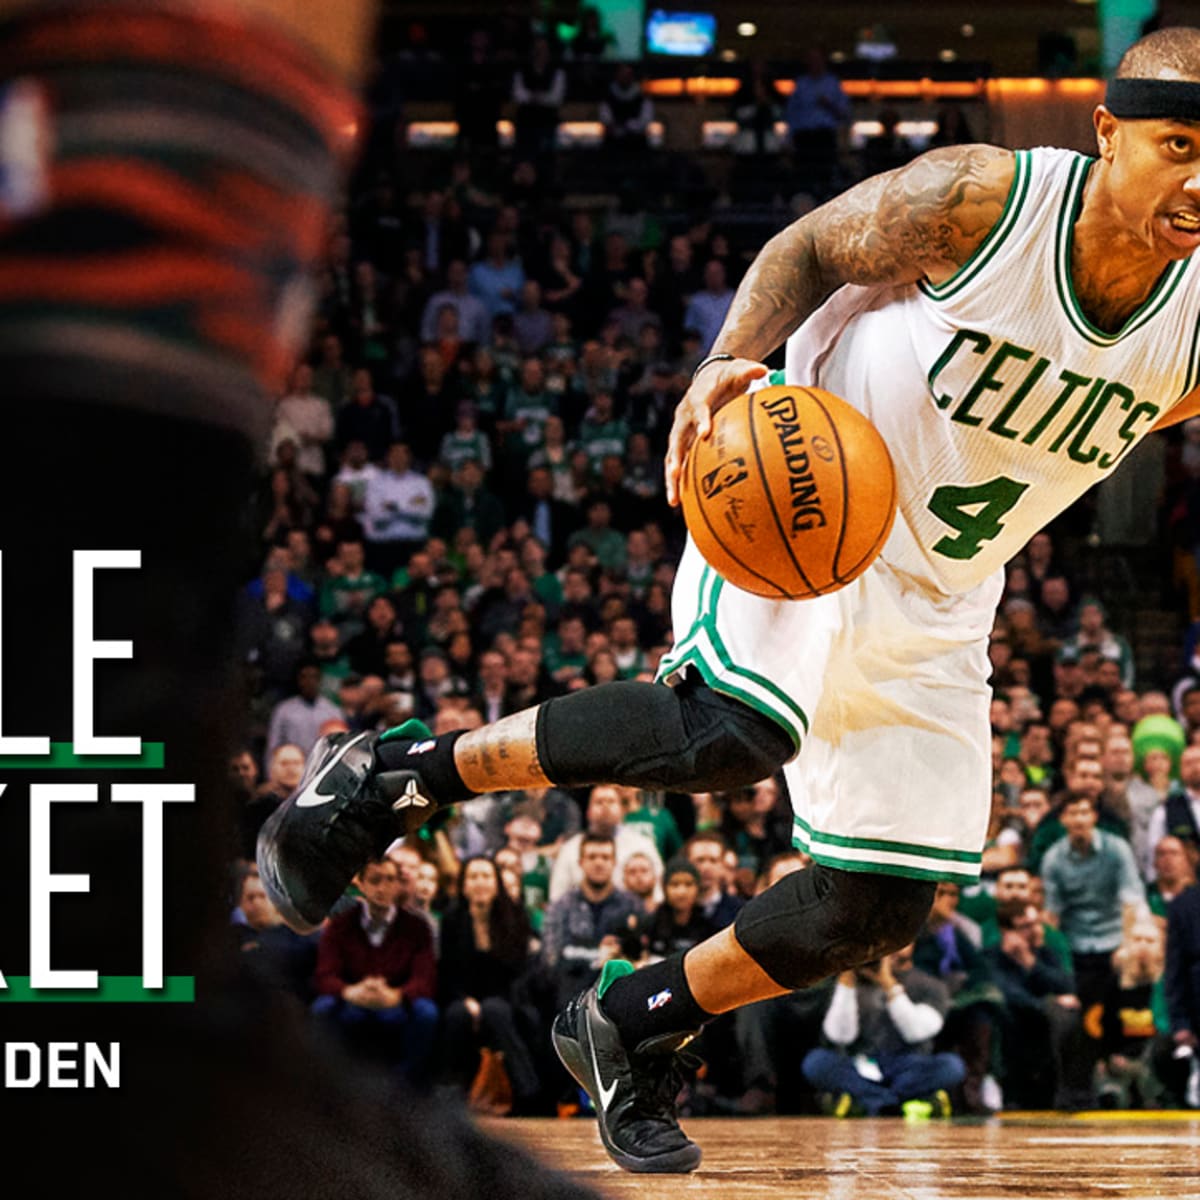 Boston Celtics' Isaiah Thomas was Last but Definitely Not Least